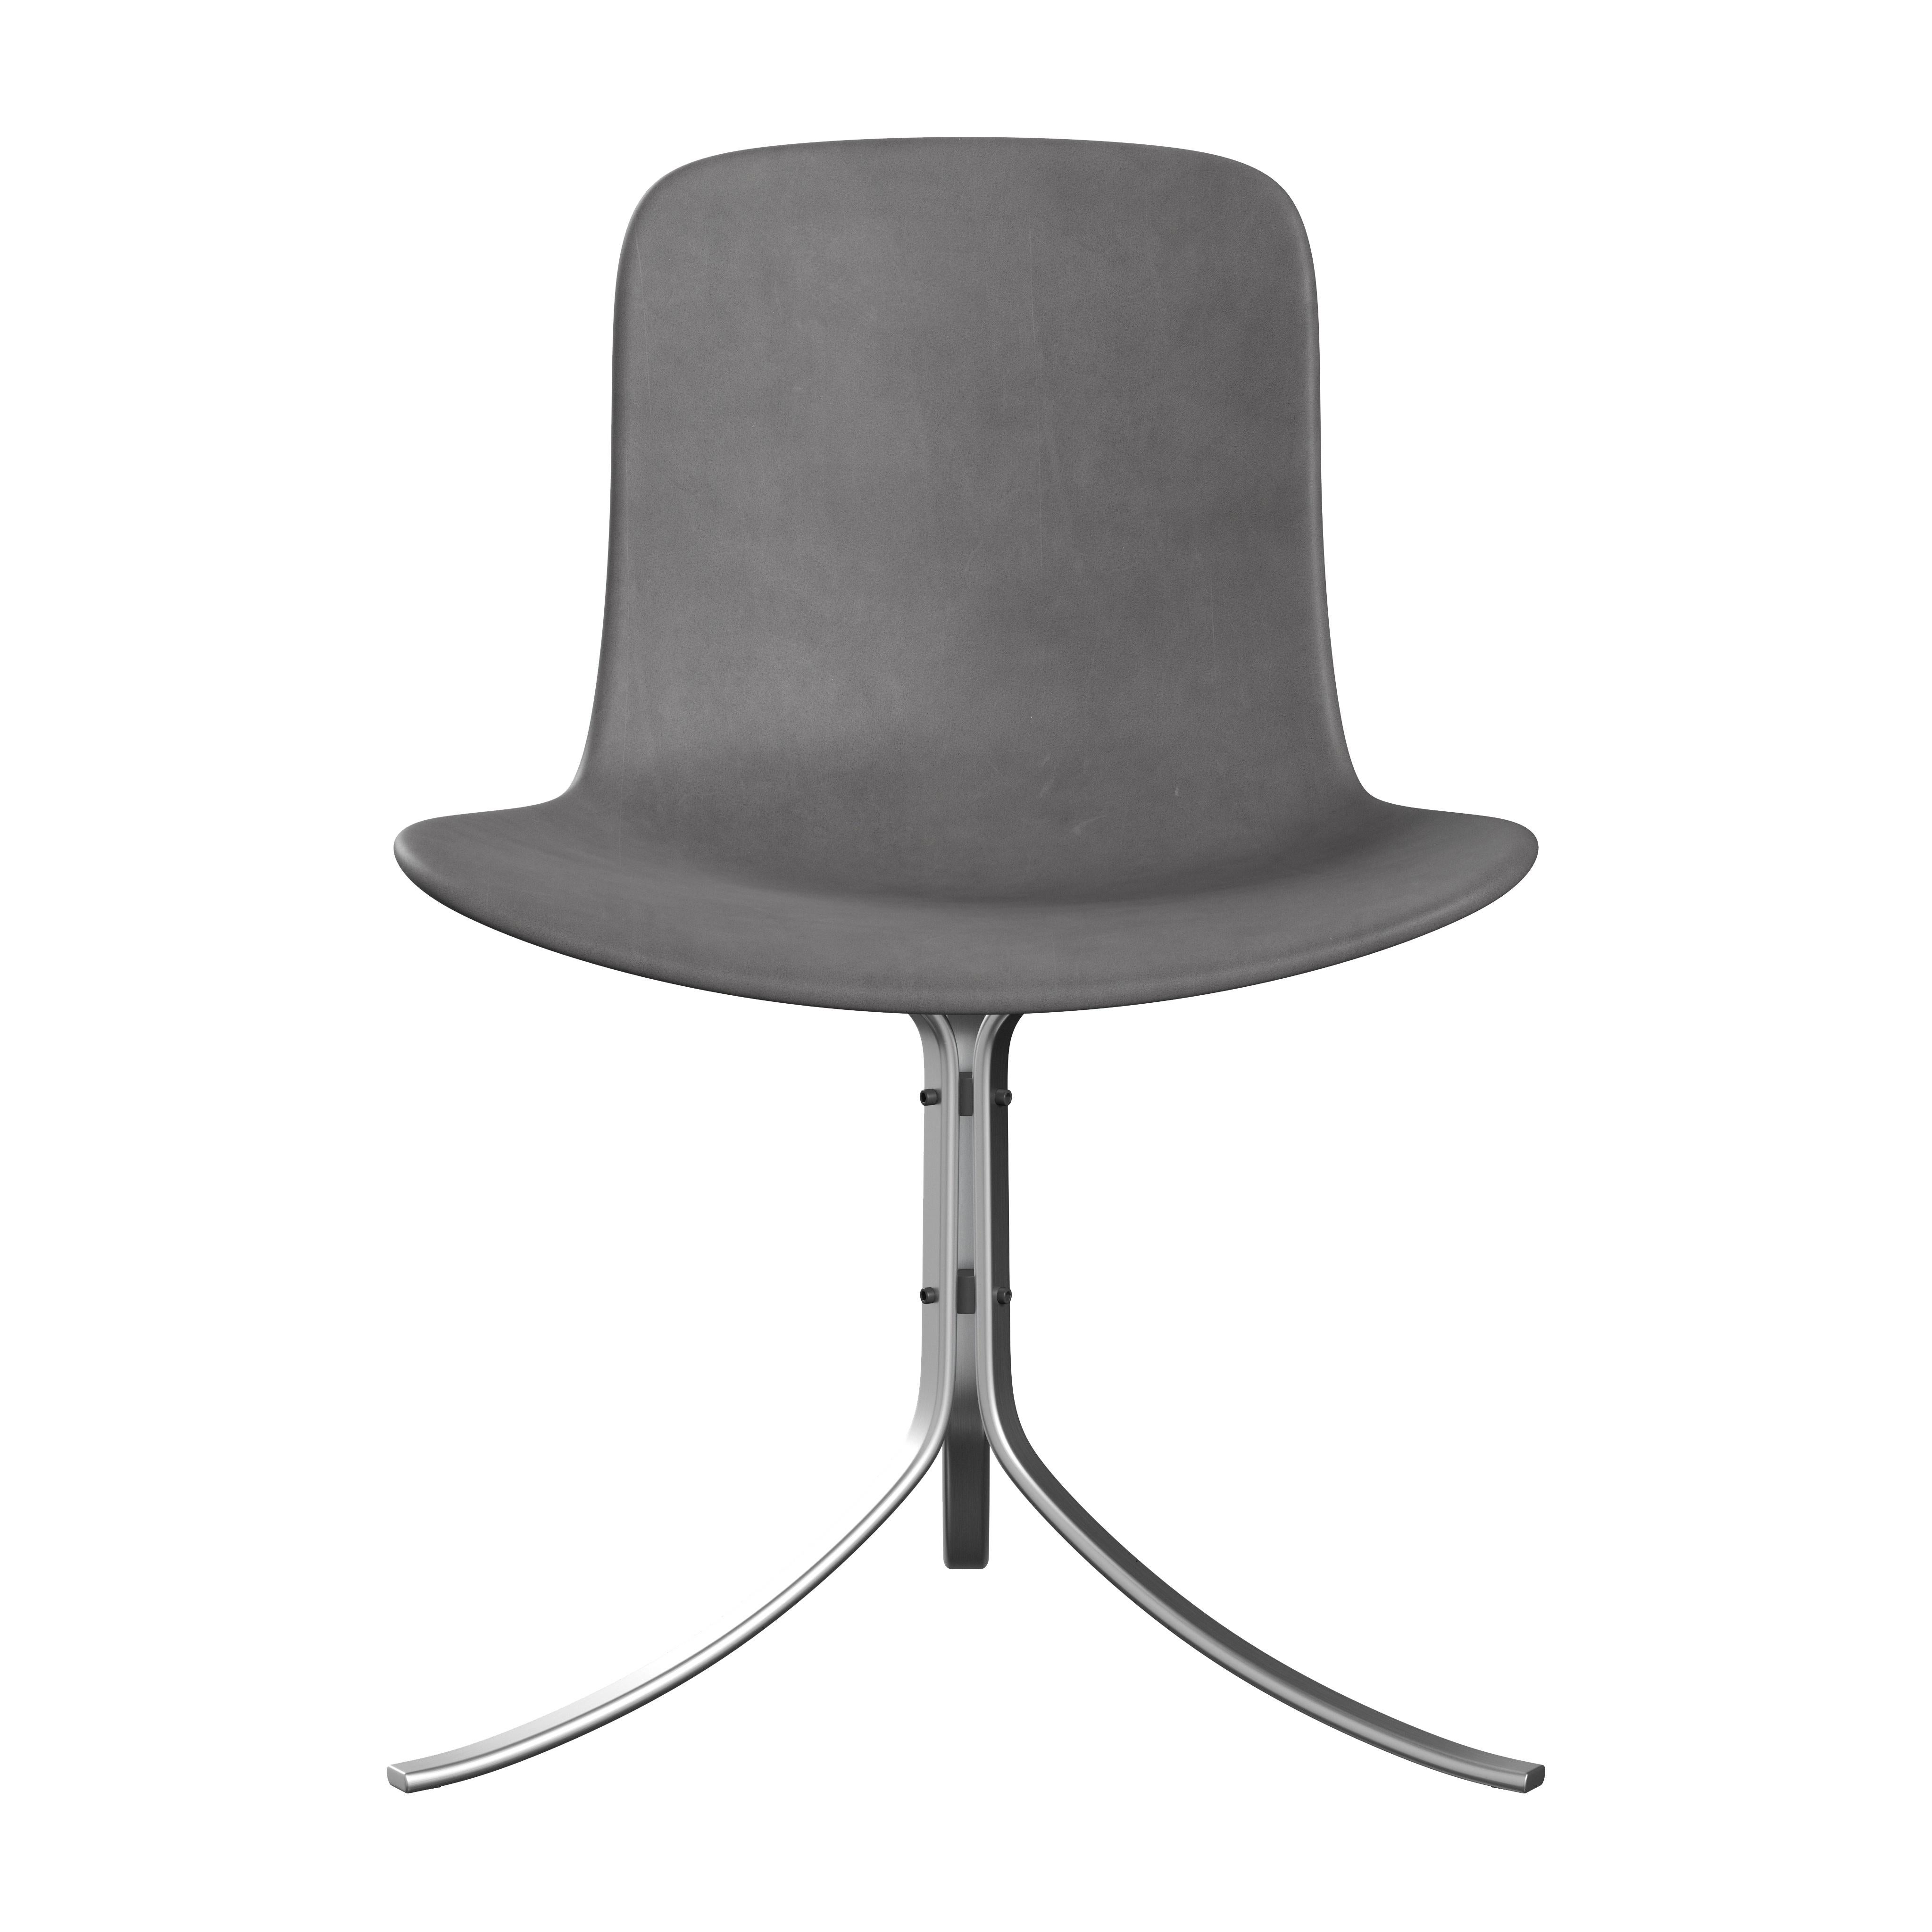 Poul Kjærholm 'PK9' Dining Chair for Fritz Hansen in Leather (Cat. 5) For Sale 6